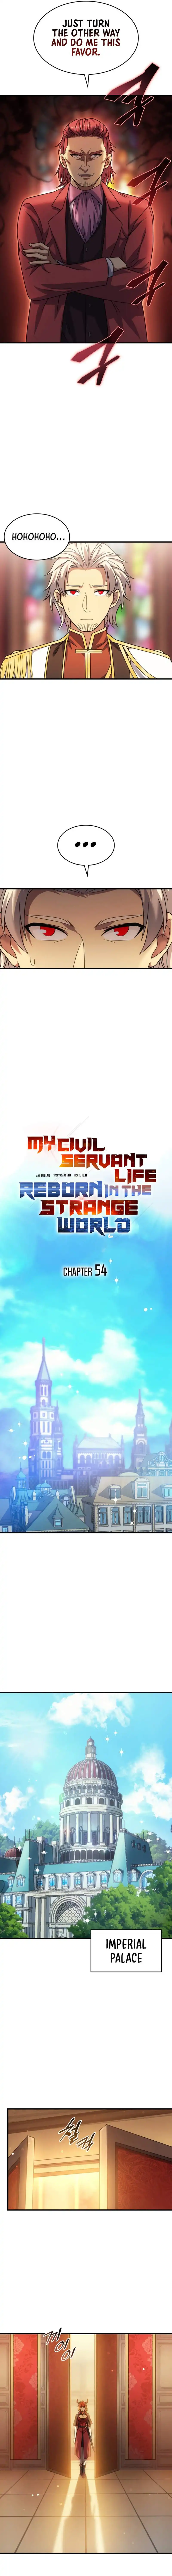 My Civil Servant Life Reborn in the Strange World Chapter 54